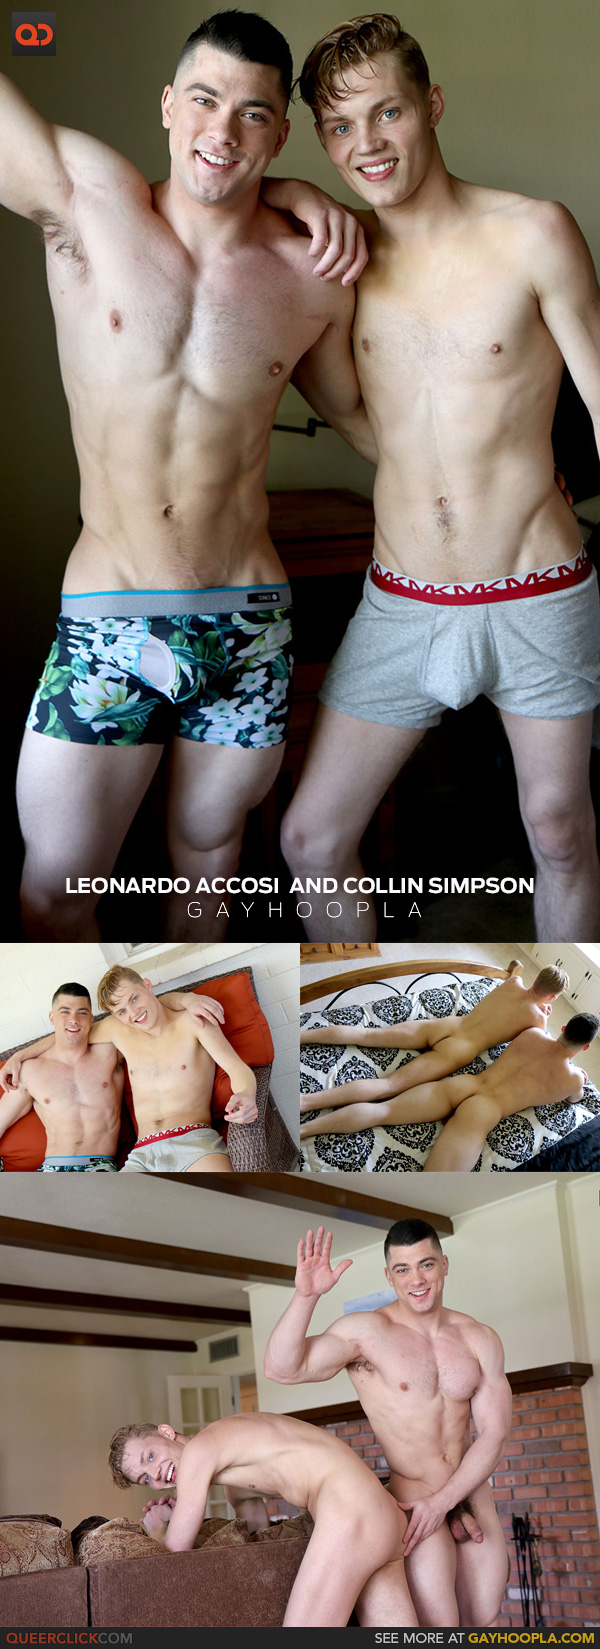 Gayhoopla: Leonardo Accosi Loses Anal His Virginity To Collin Simpson